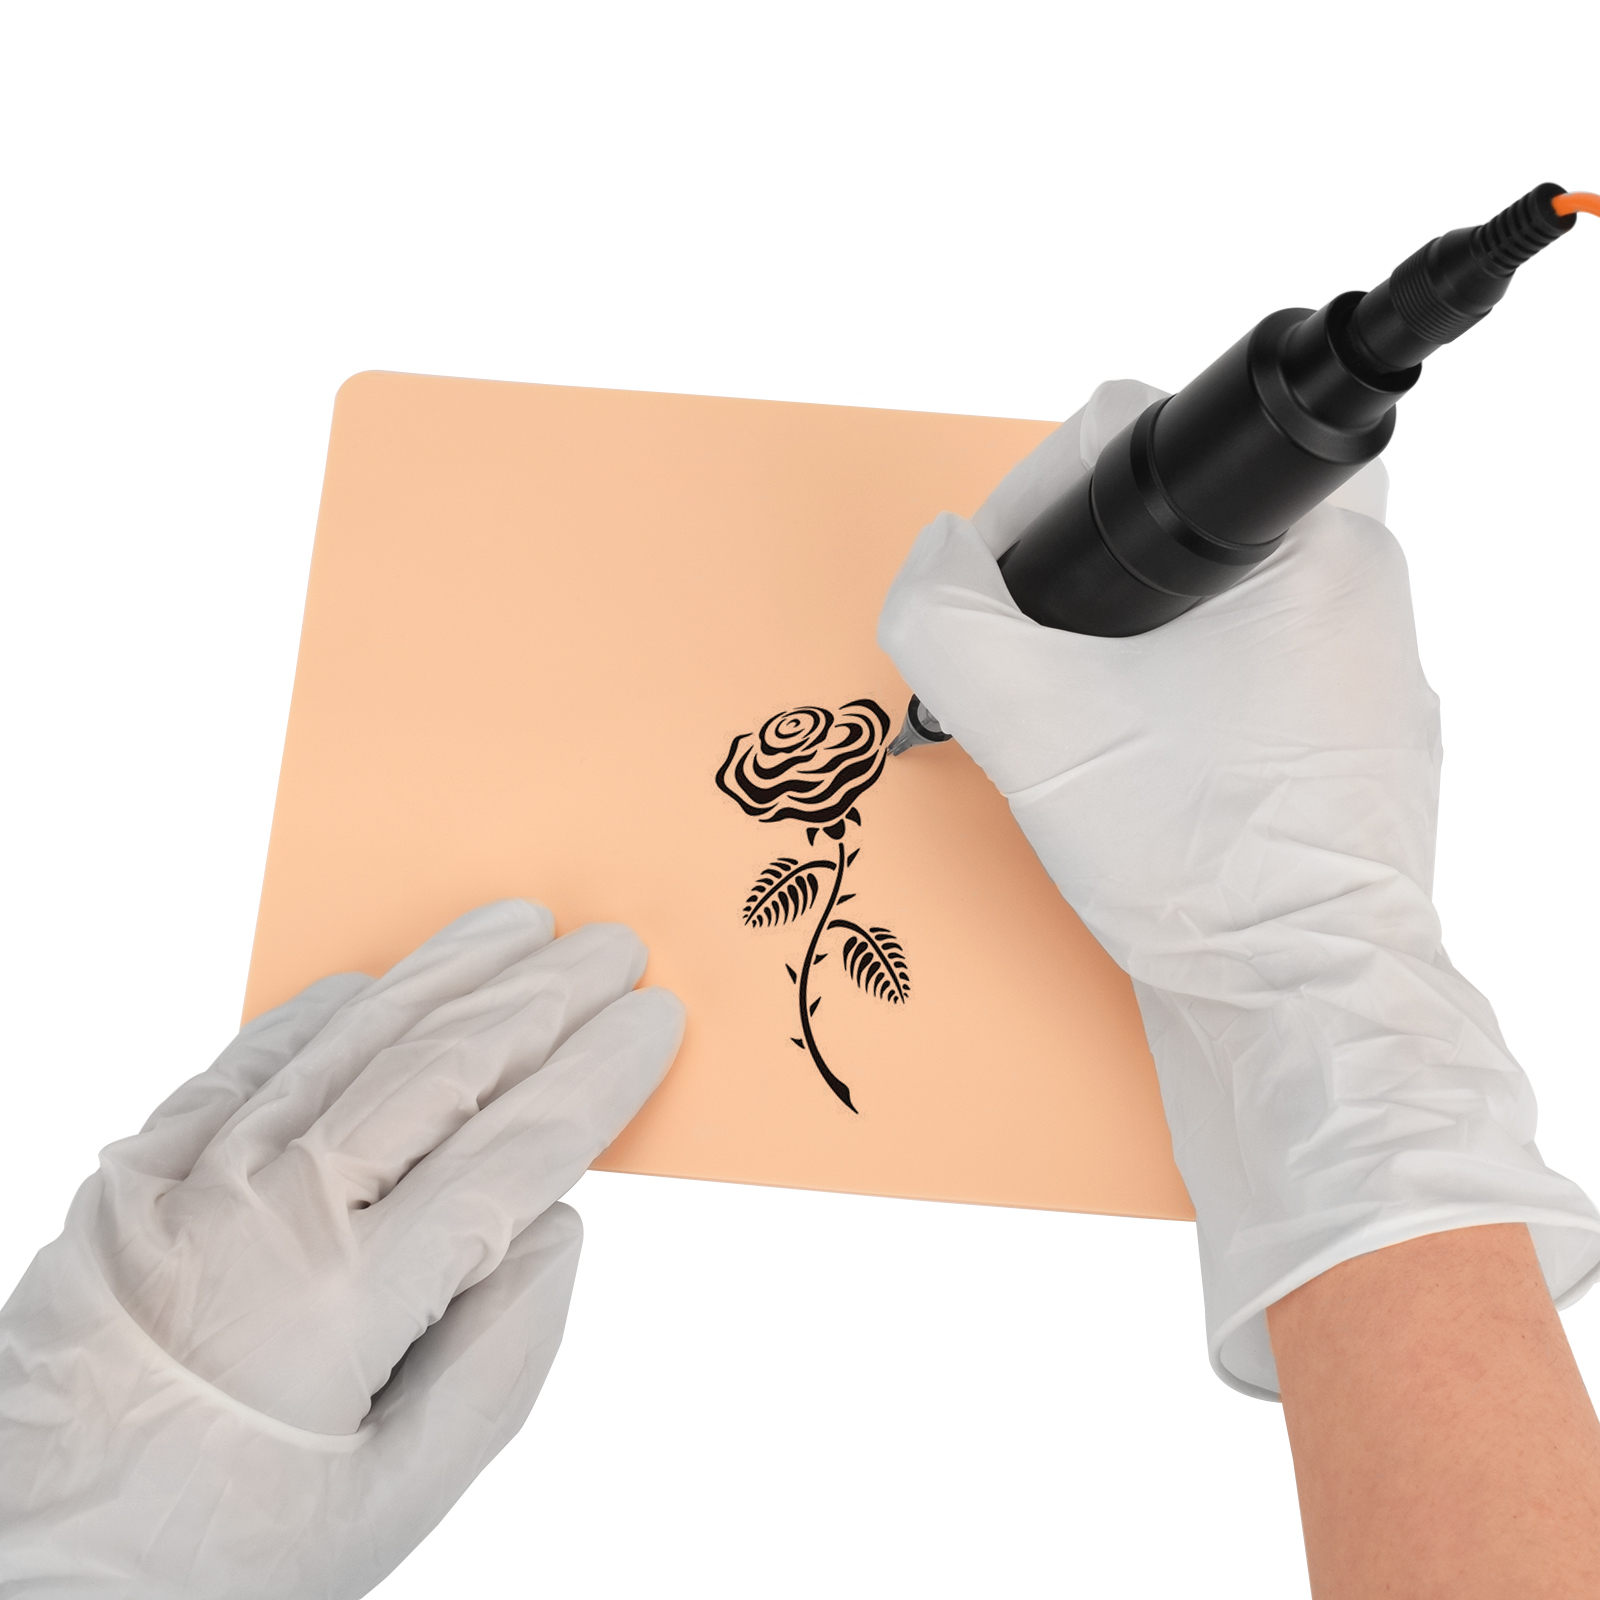 Silicone Tattoo Practice Skin 1mm espessura para iniciantes laranja fosco matte em branco 